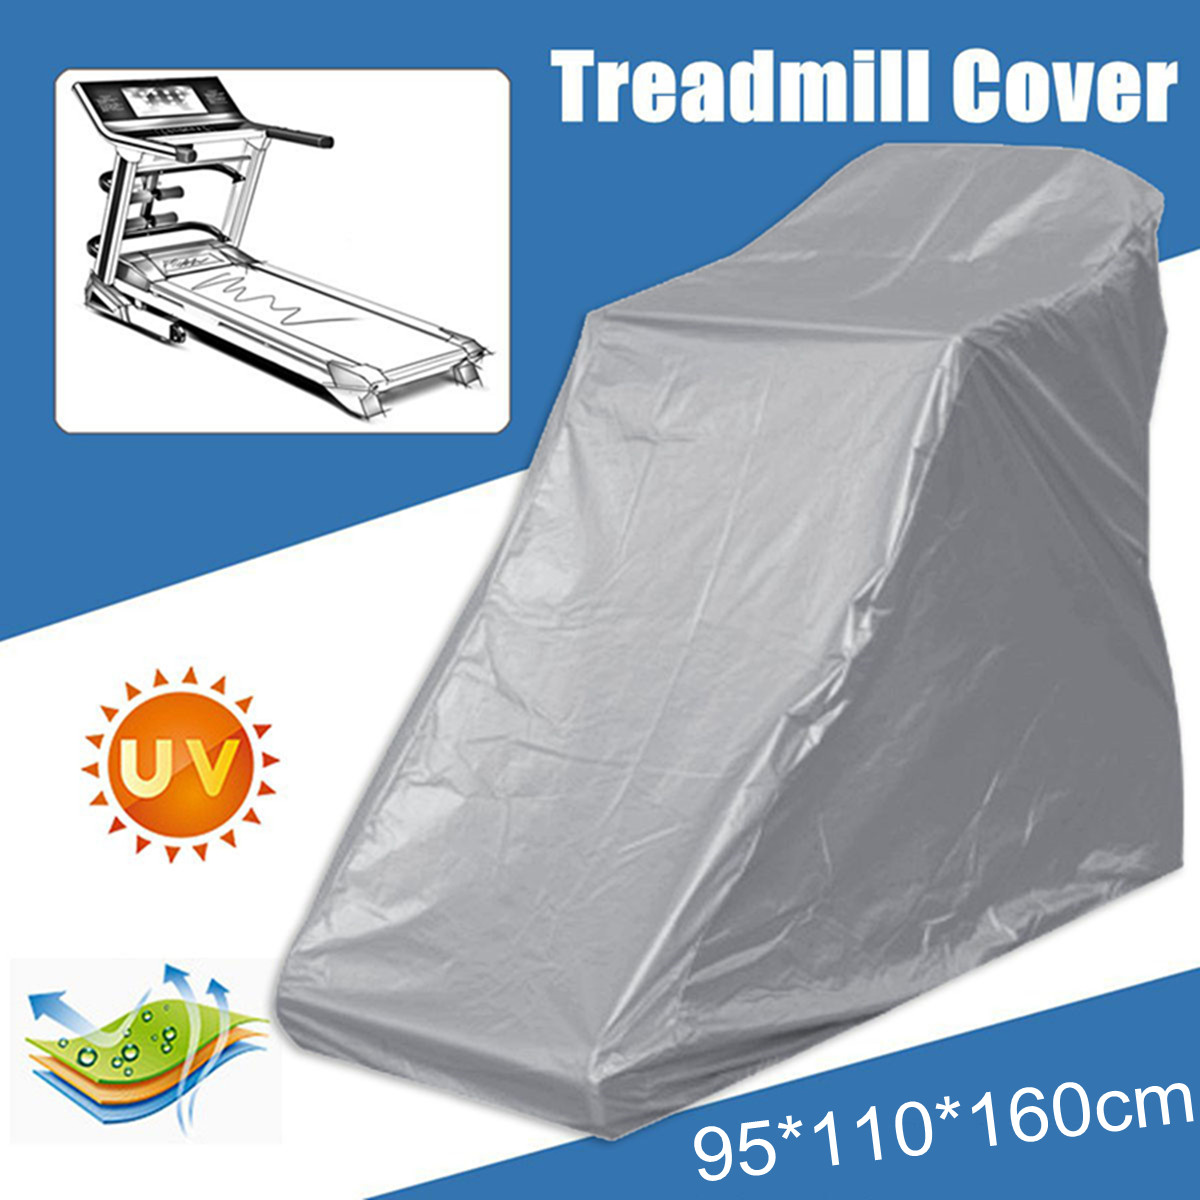 95110160cm-Oxford-Treadmill-Running-Jogging-Machine-Dust-proof-Waterproof-Cover-Shelter-Sunshield-Pr-1645781-1